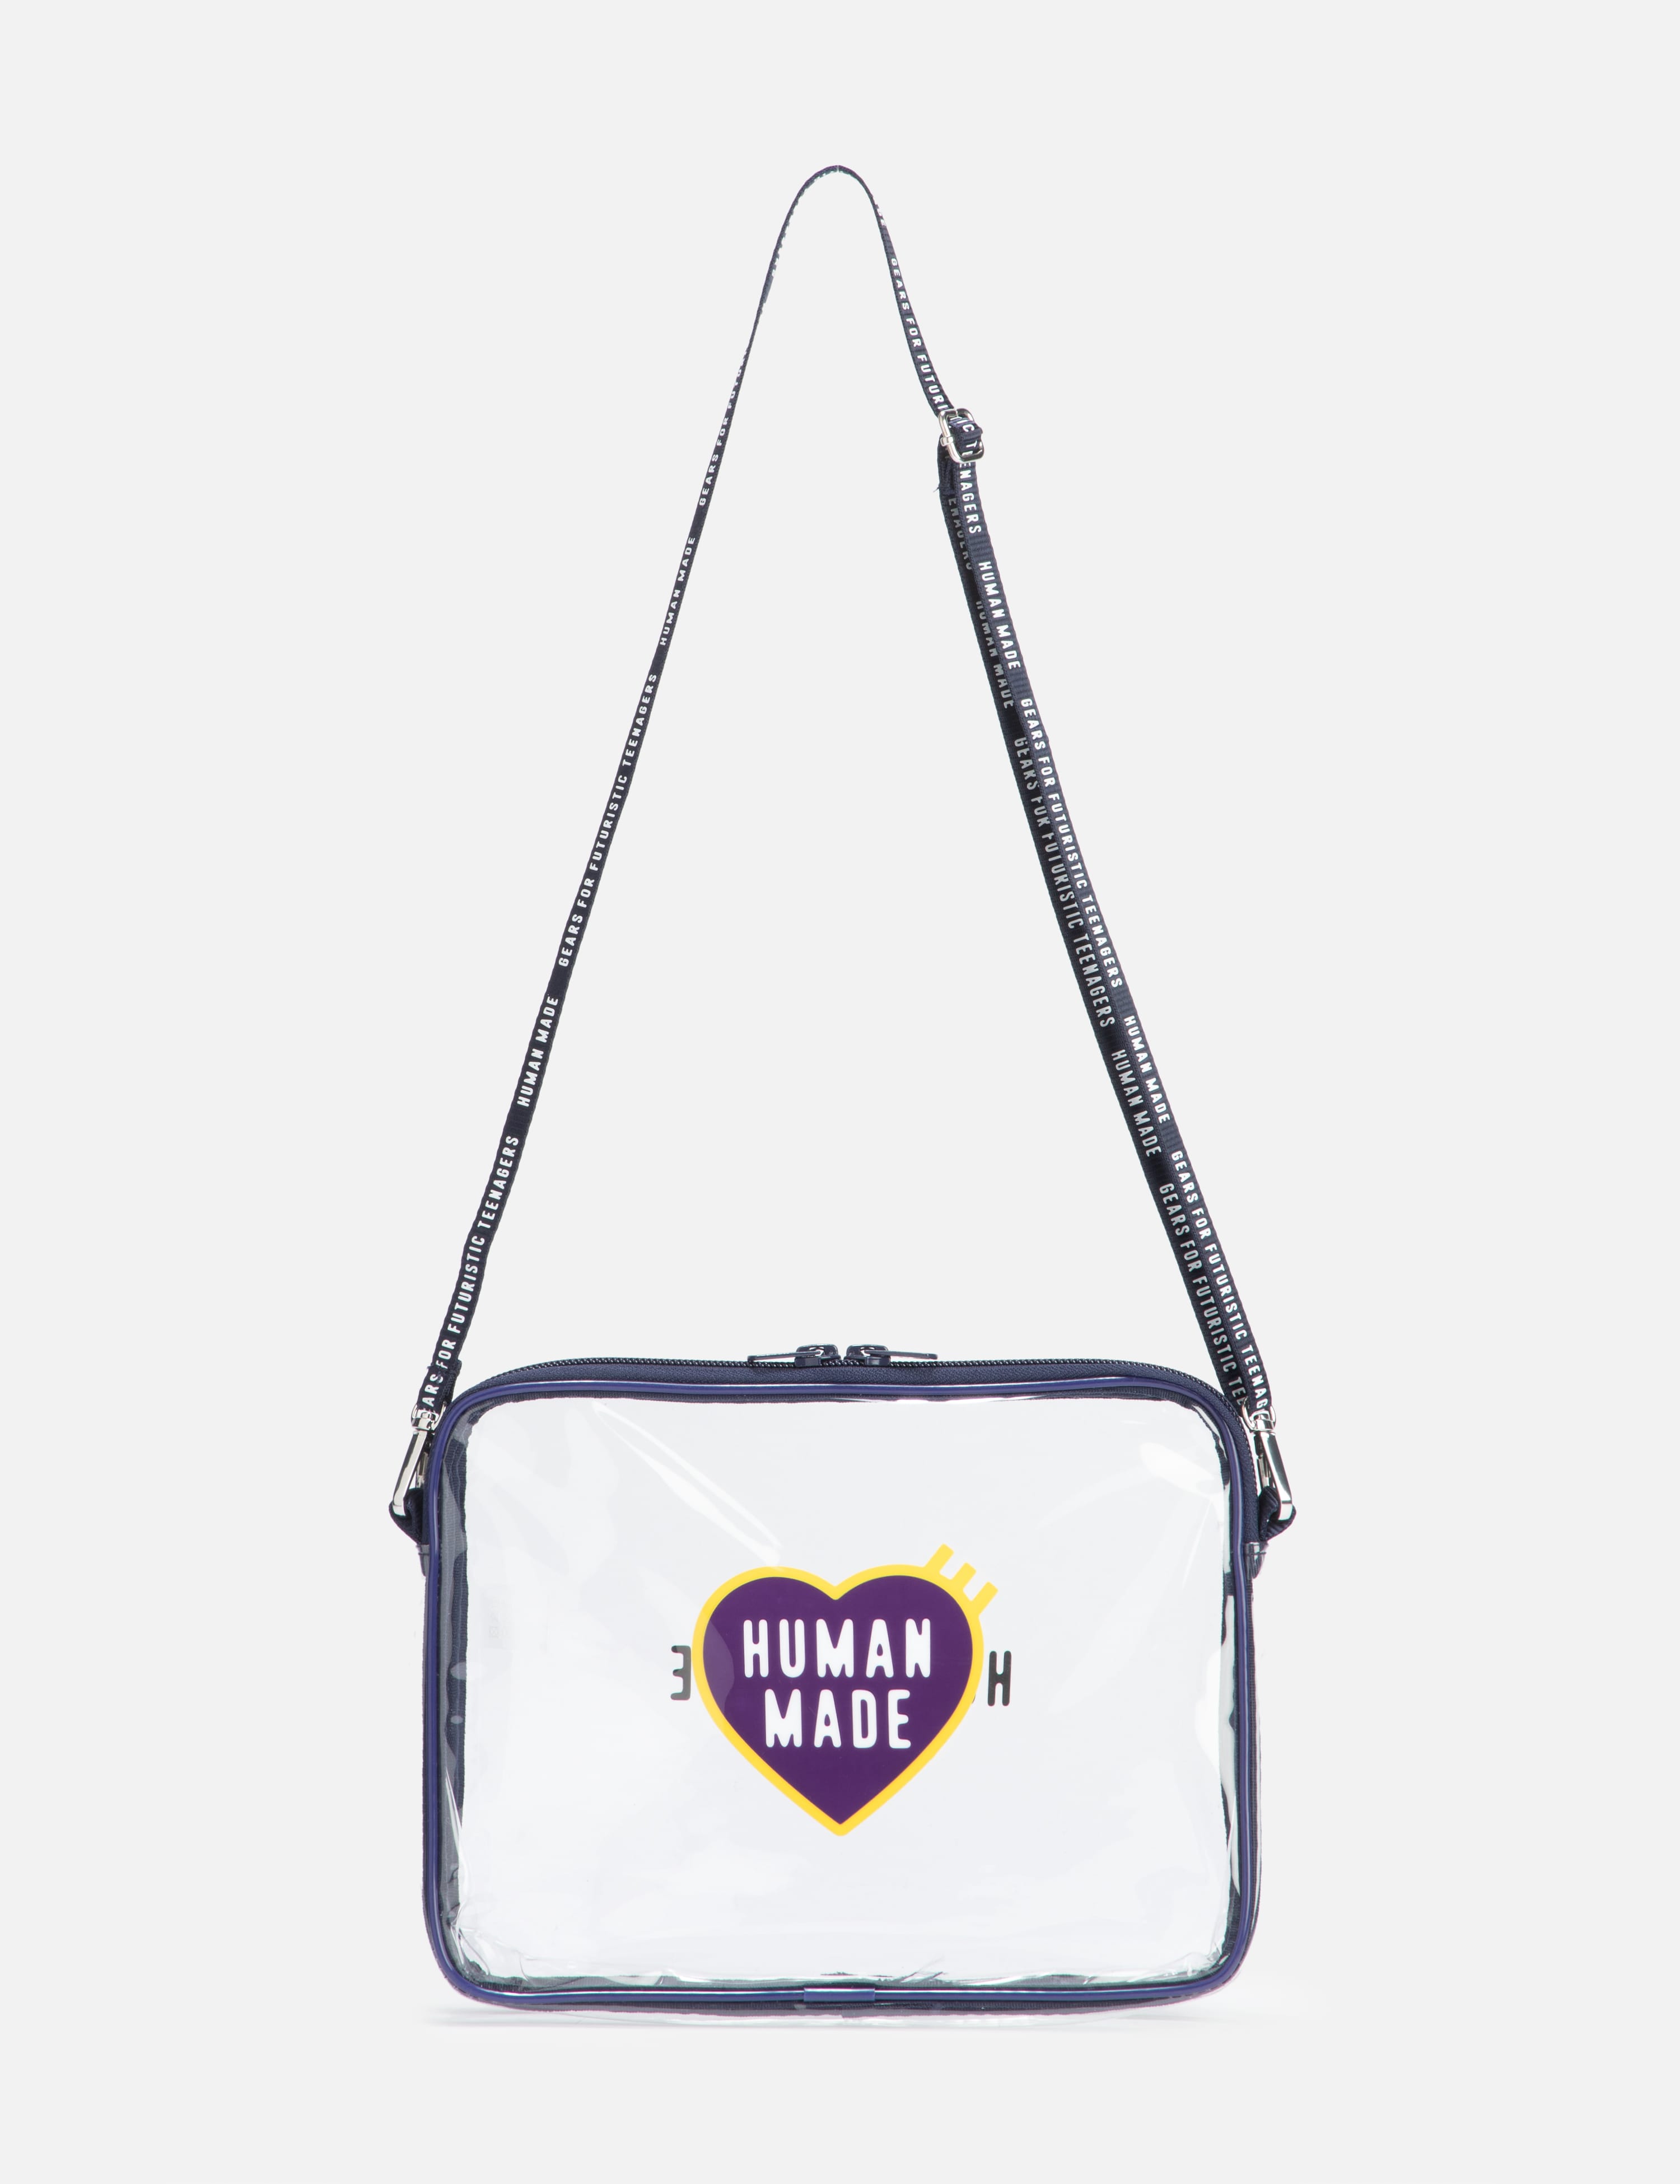 Human Made - 2Way Shoulder Bag | HBX - Globally Curated Fashion